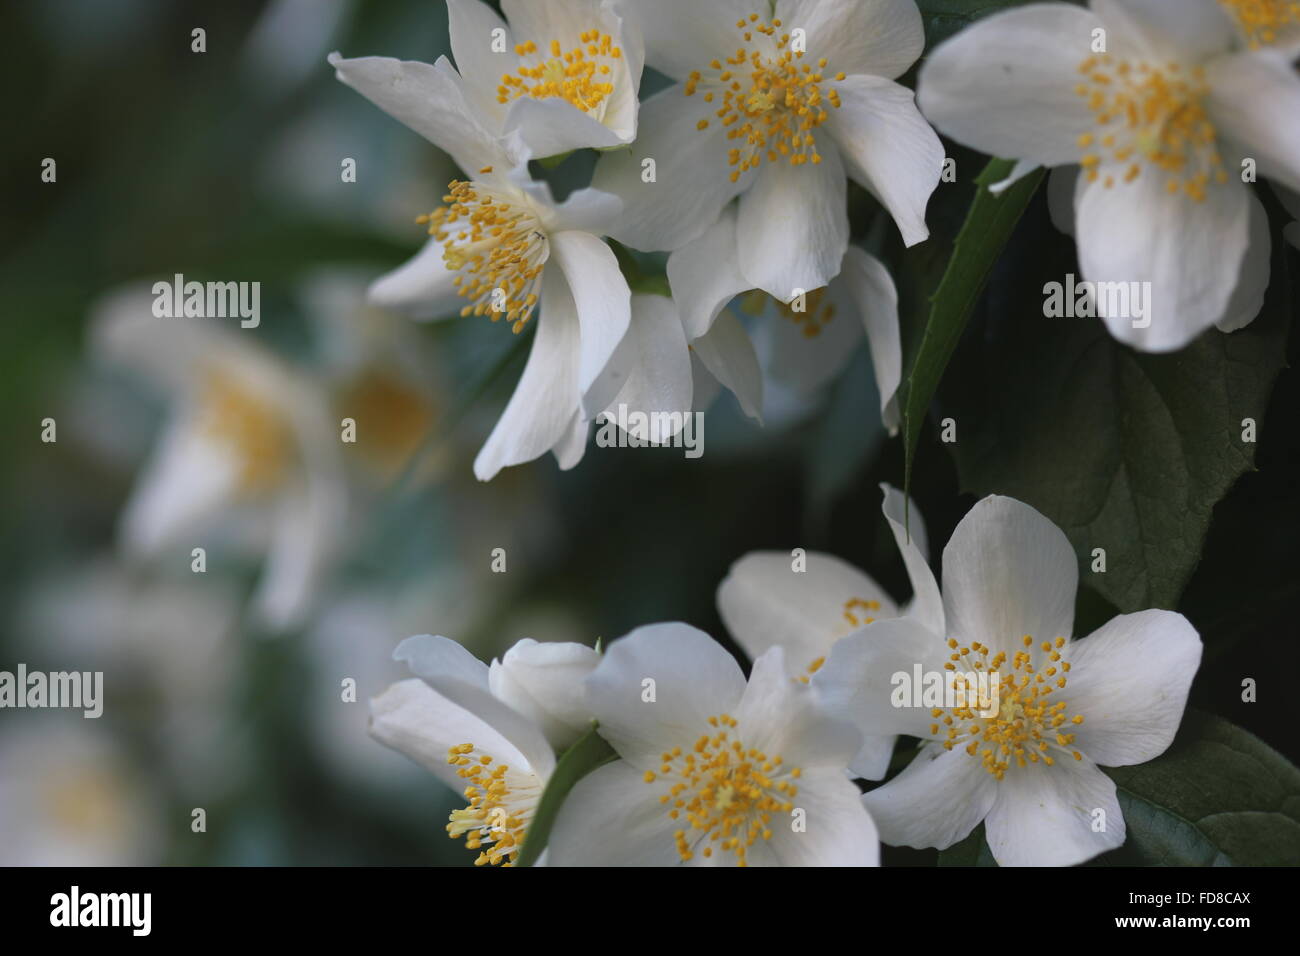 Close-Up Of Jasmine Flowers Growing On Tree Stock Photo